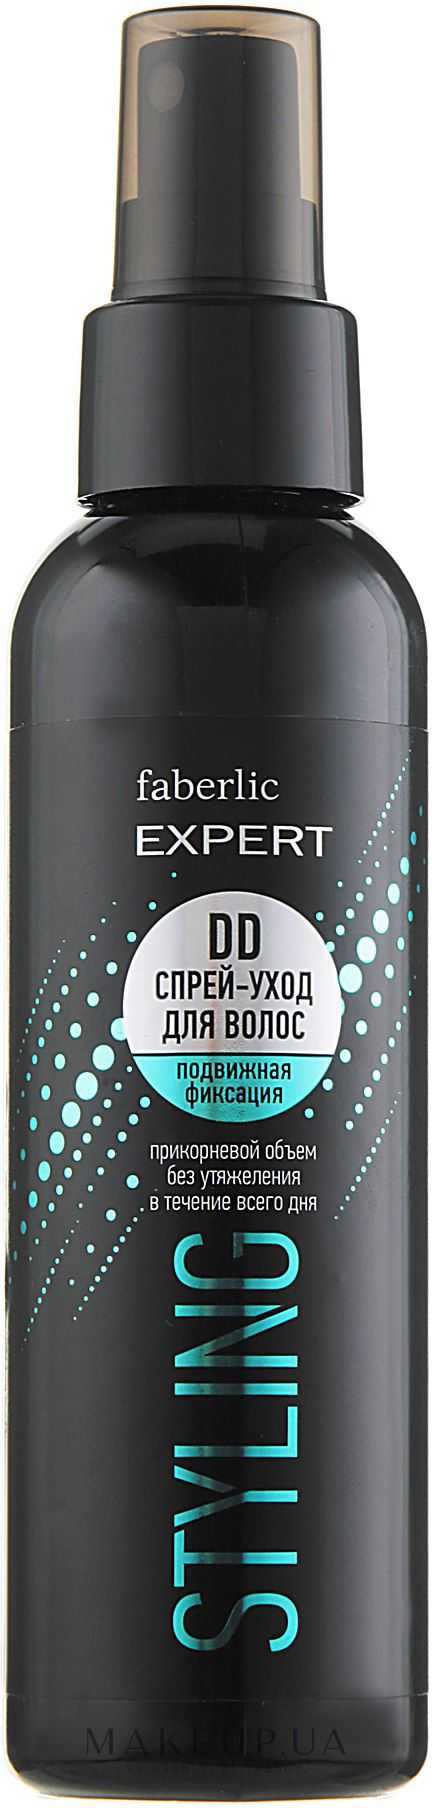 Dd спрей-уход для волос faberlic expert styling